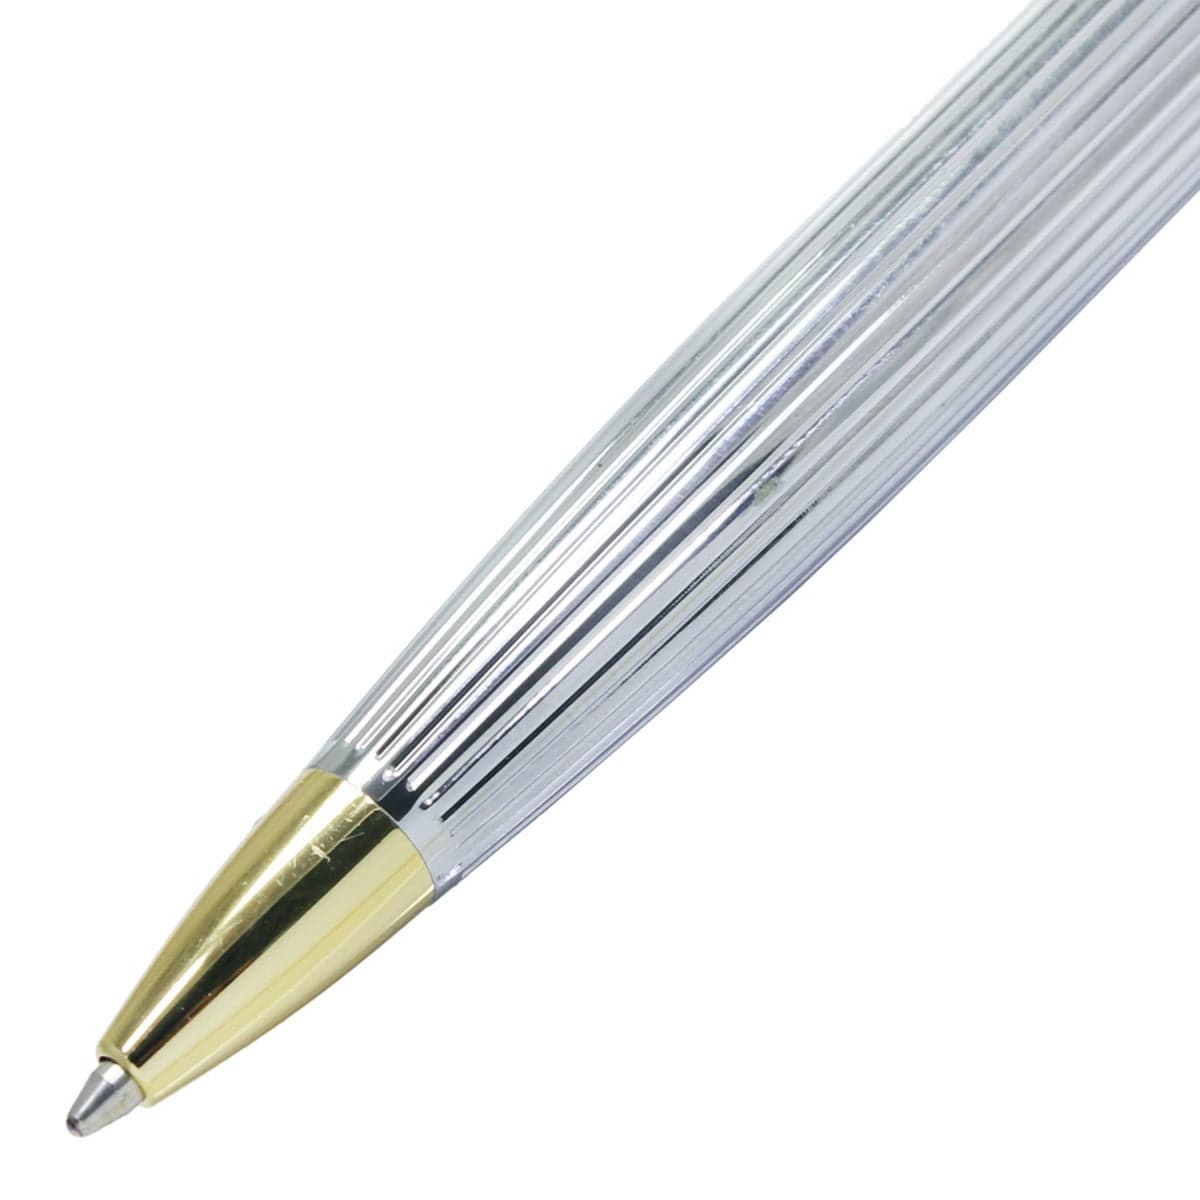 jags-mumbai Ball Pens Silver and Gold Ballpoint Pen with Golden Clip